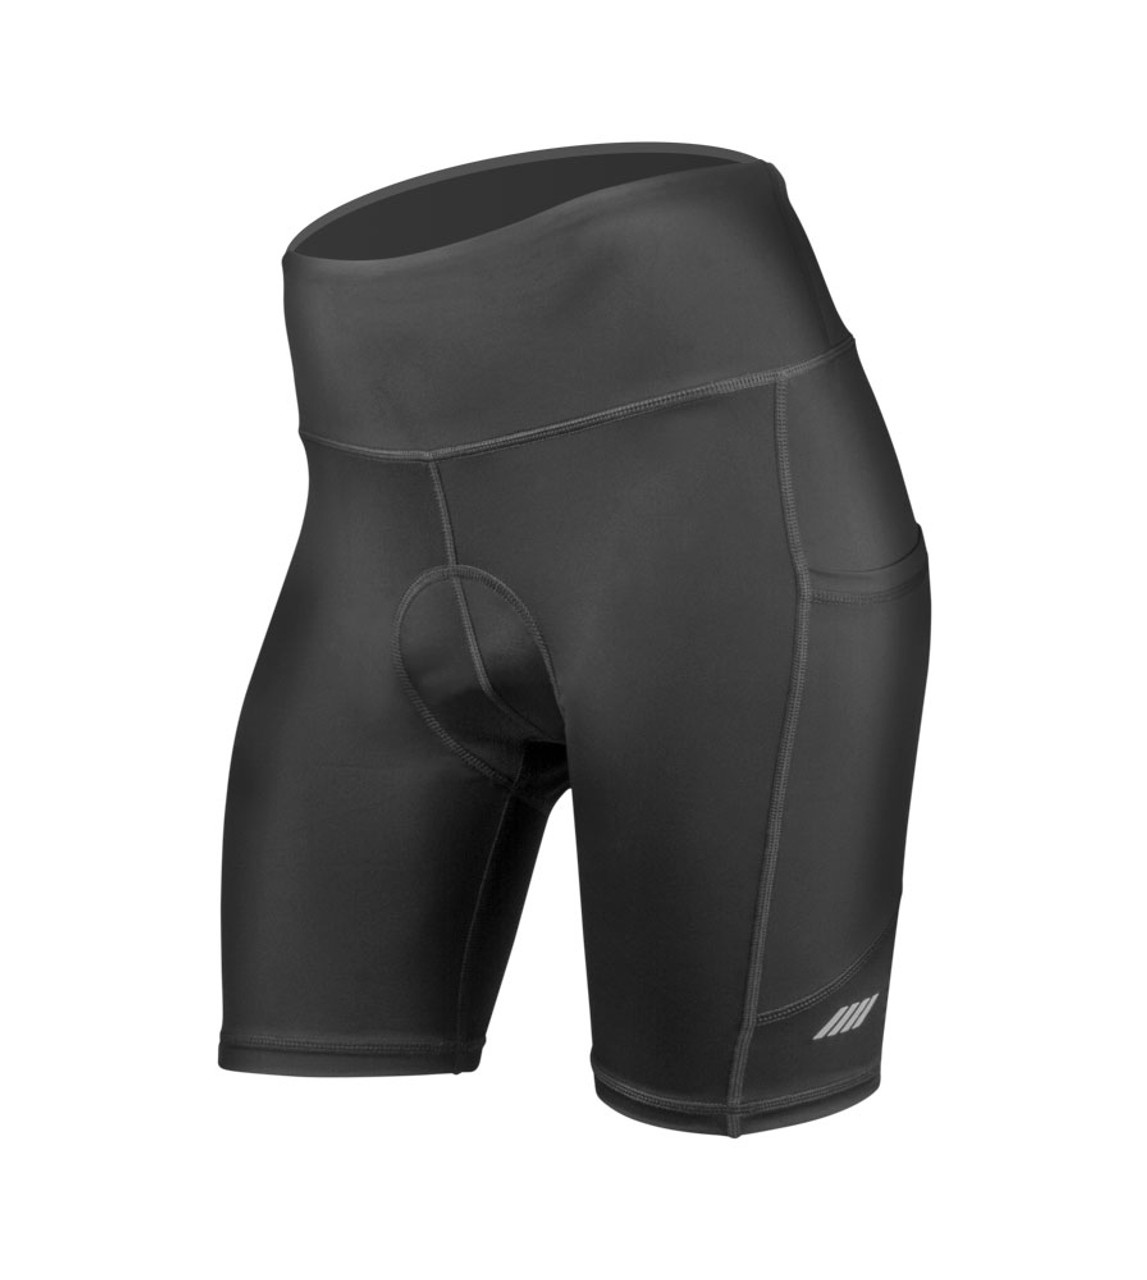 soft cycling shorts